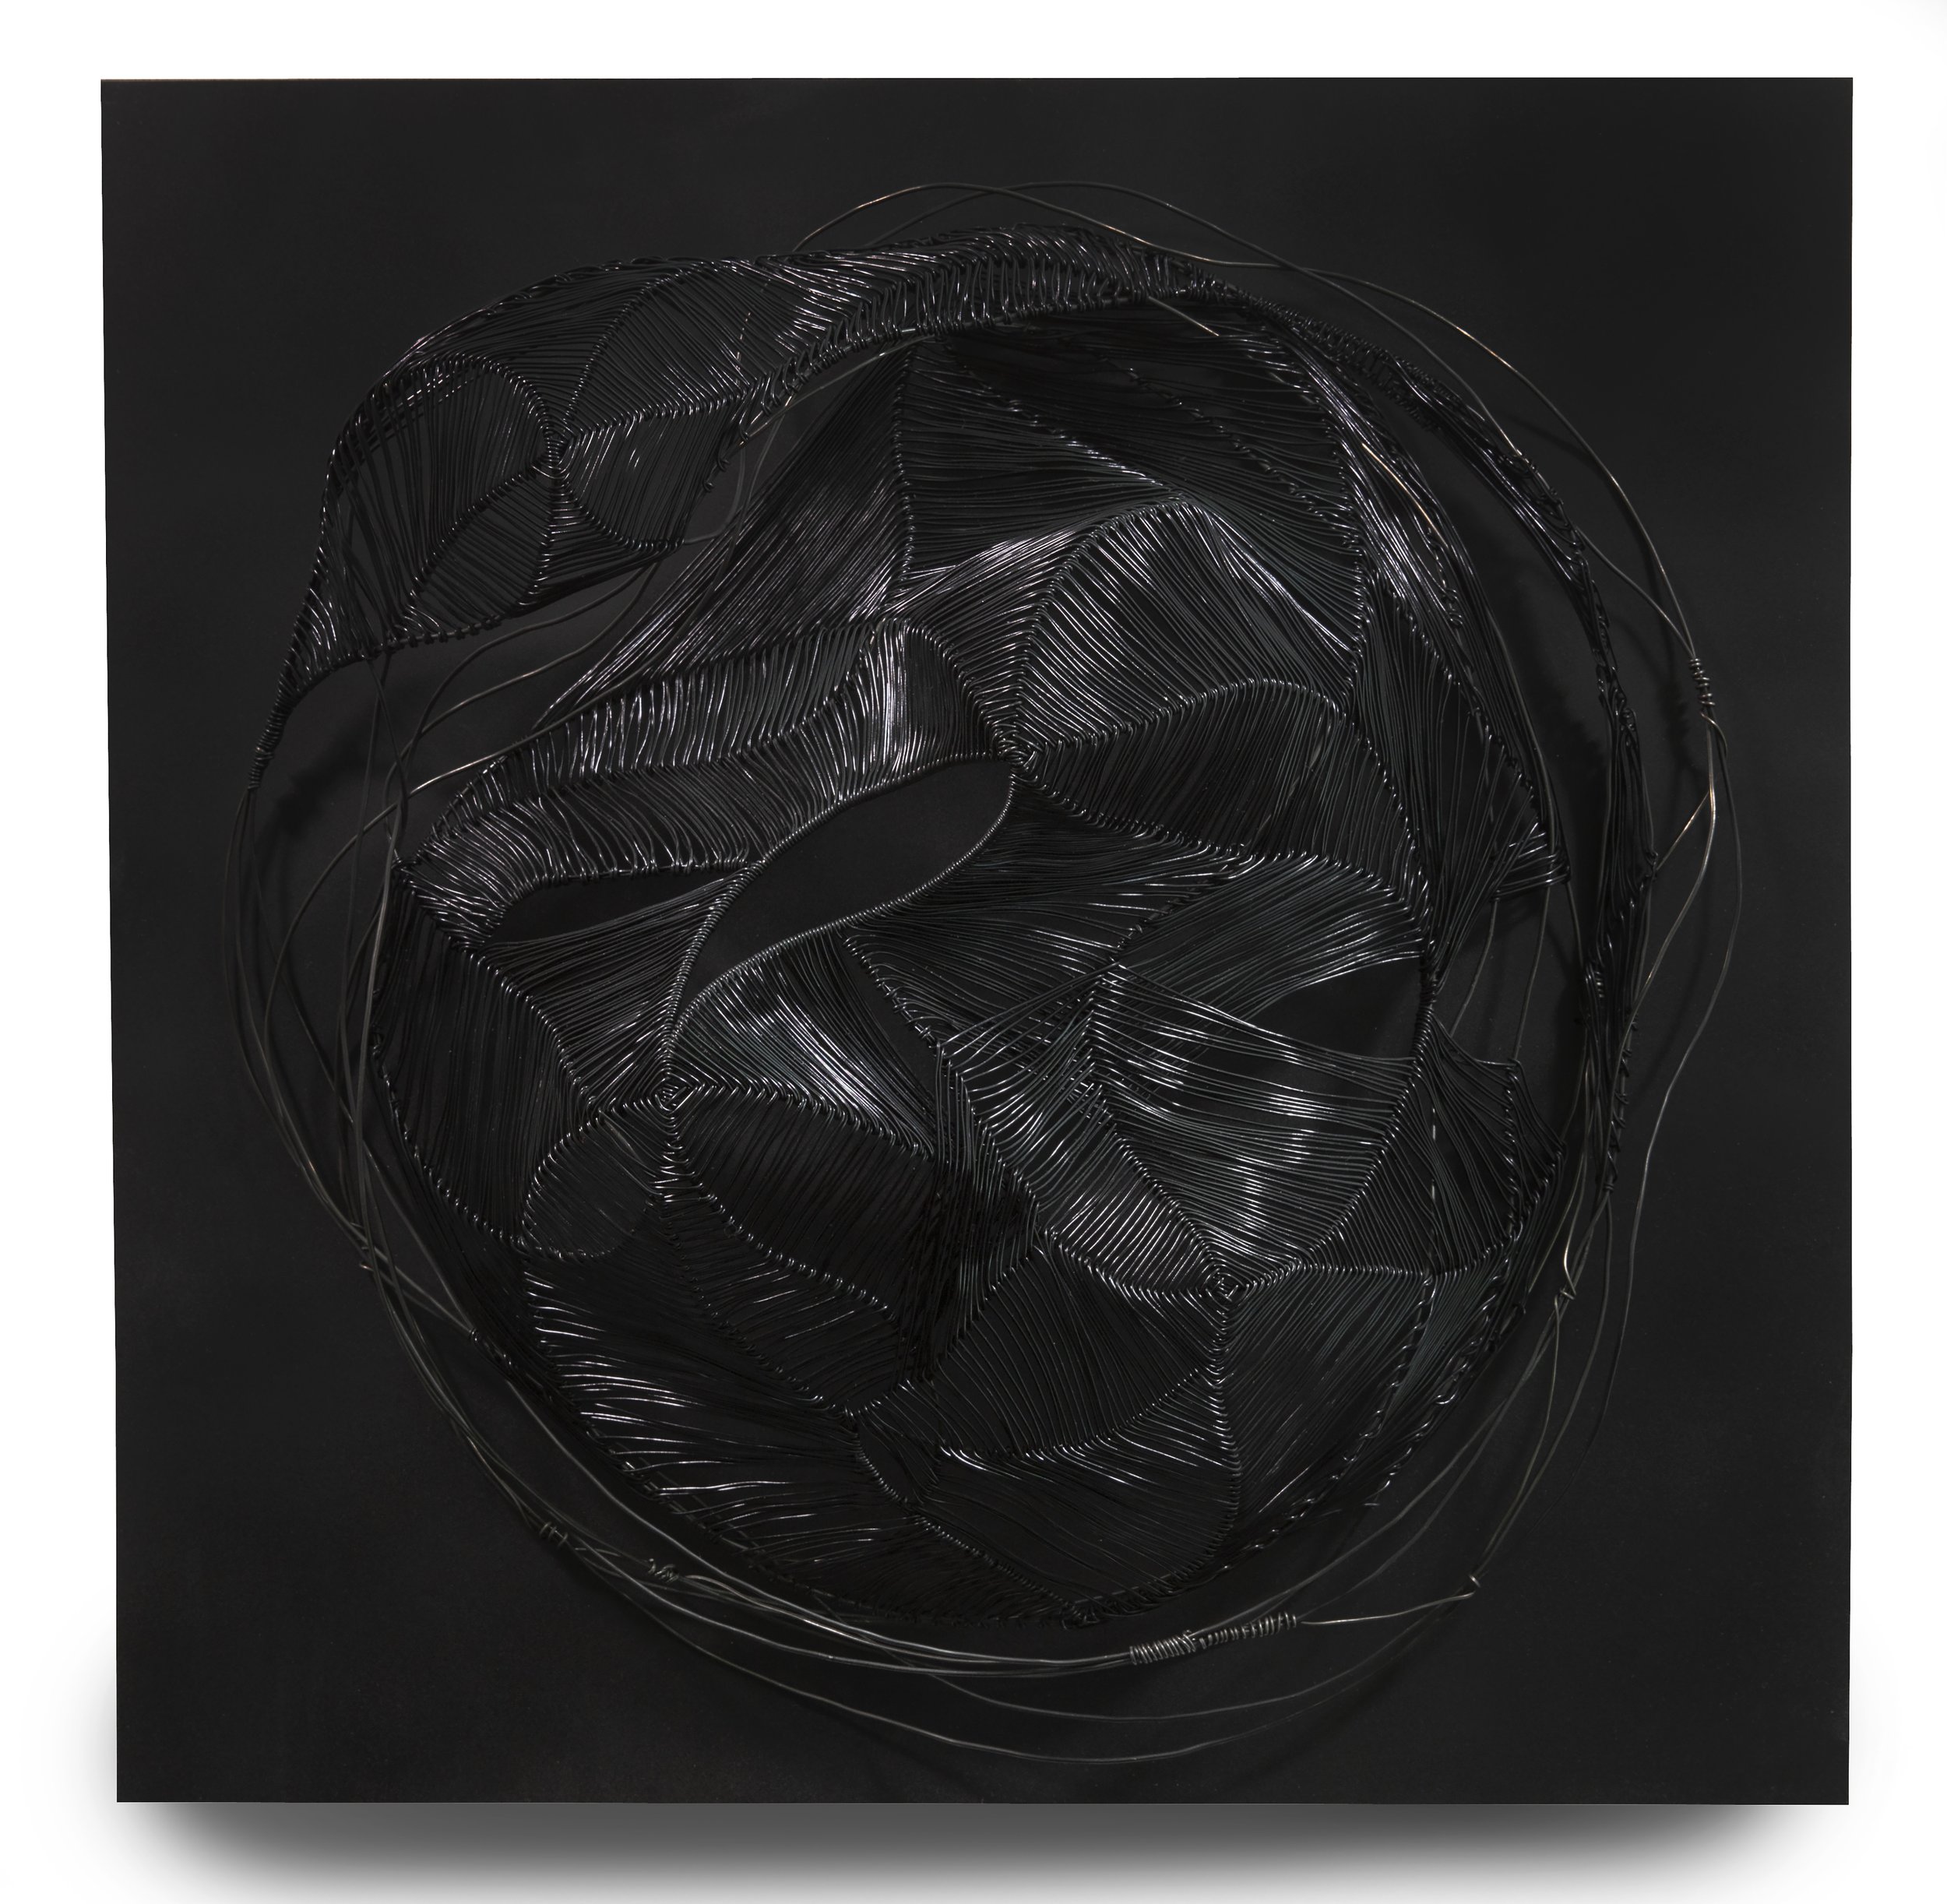   Walk Slowly - Nest in Black 2 , steel wire, aluminum wire, 18” x 18” x 7” 